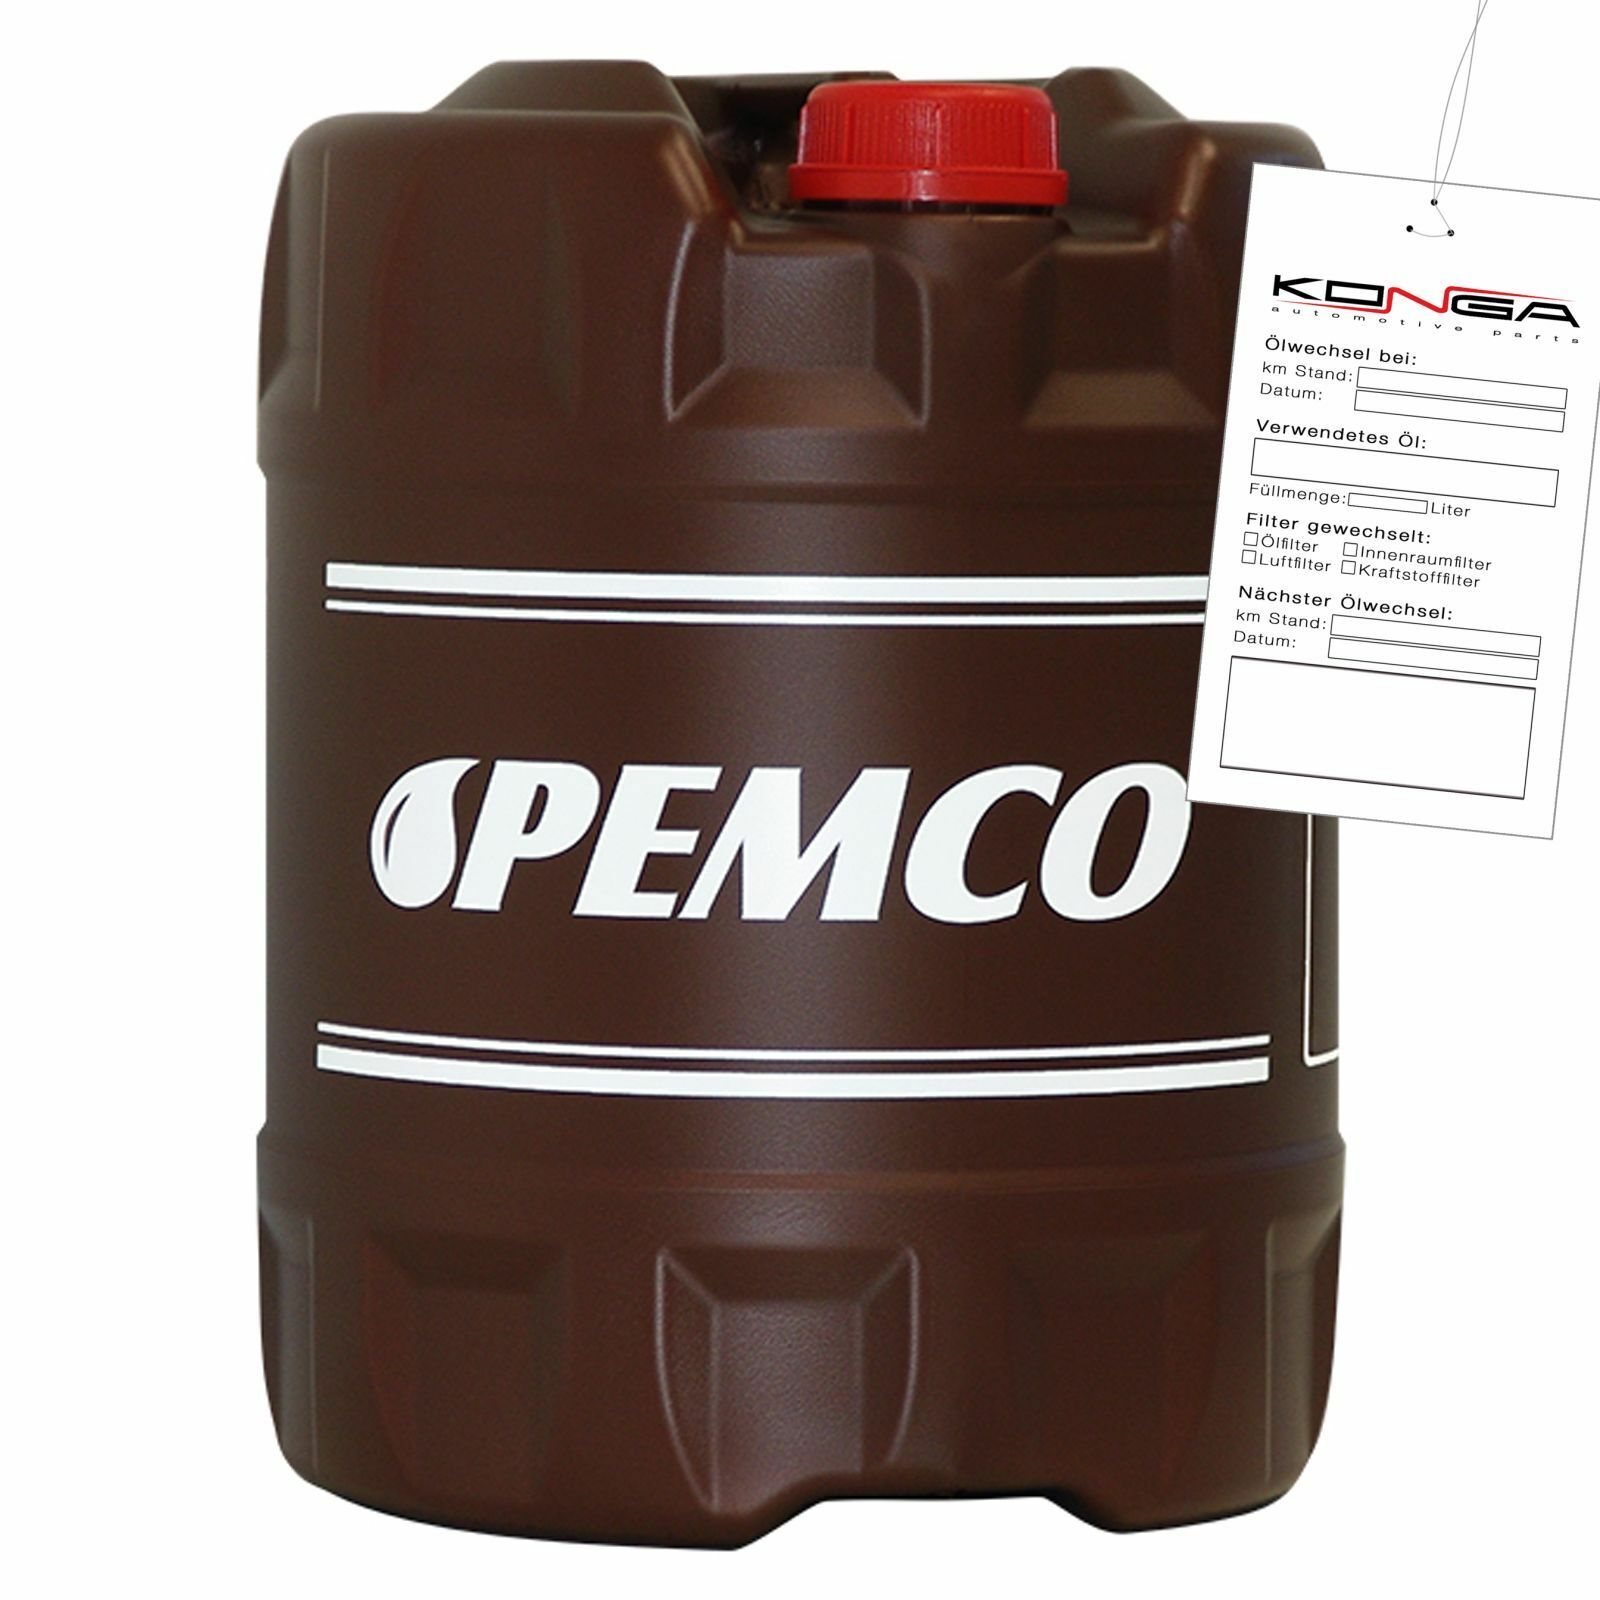 10 (1x10) Liter PEMCO Hydro ISO 46 Hydrauliköl HLP 46 / DIN 51524 DENISON HF-2